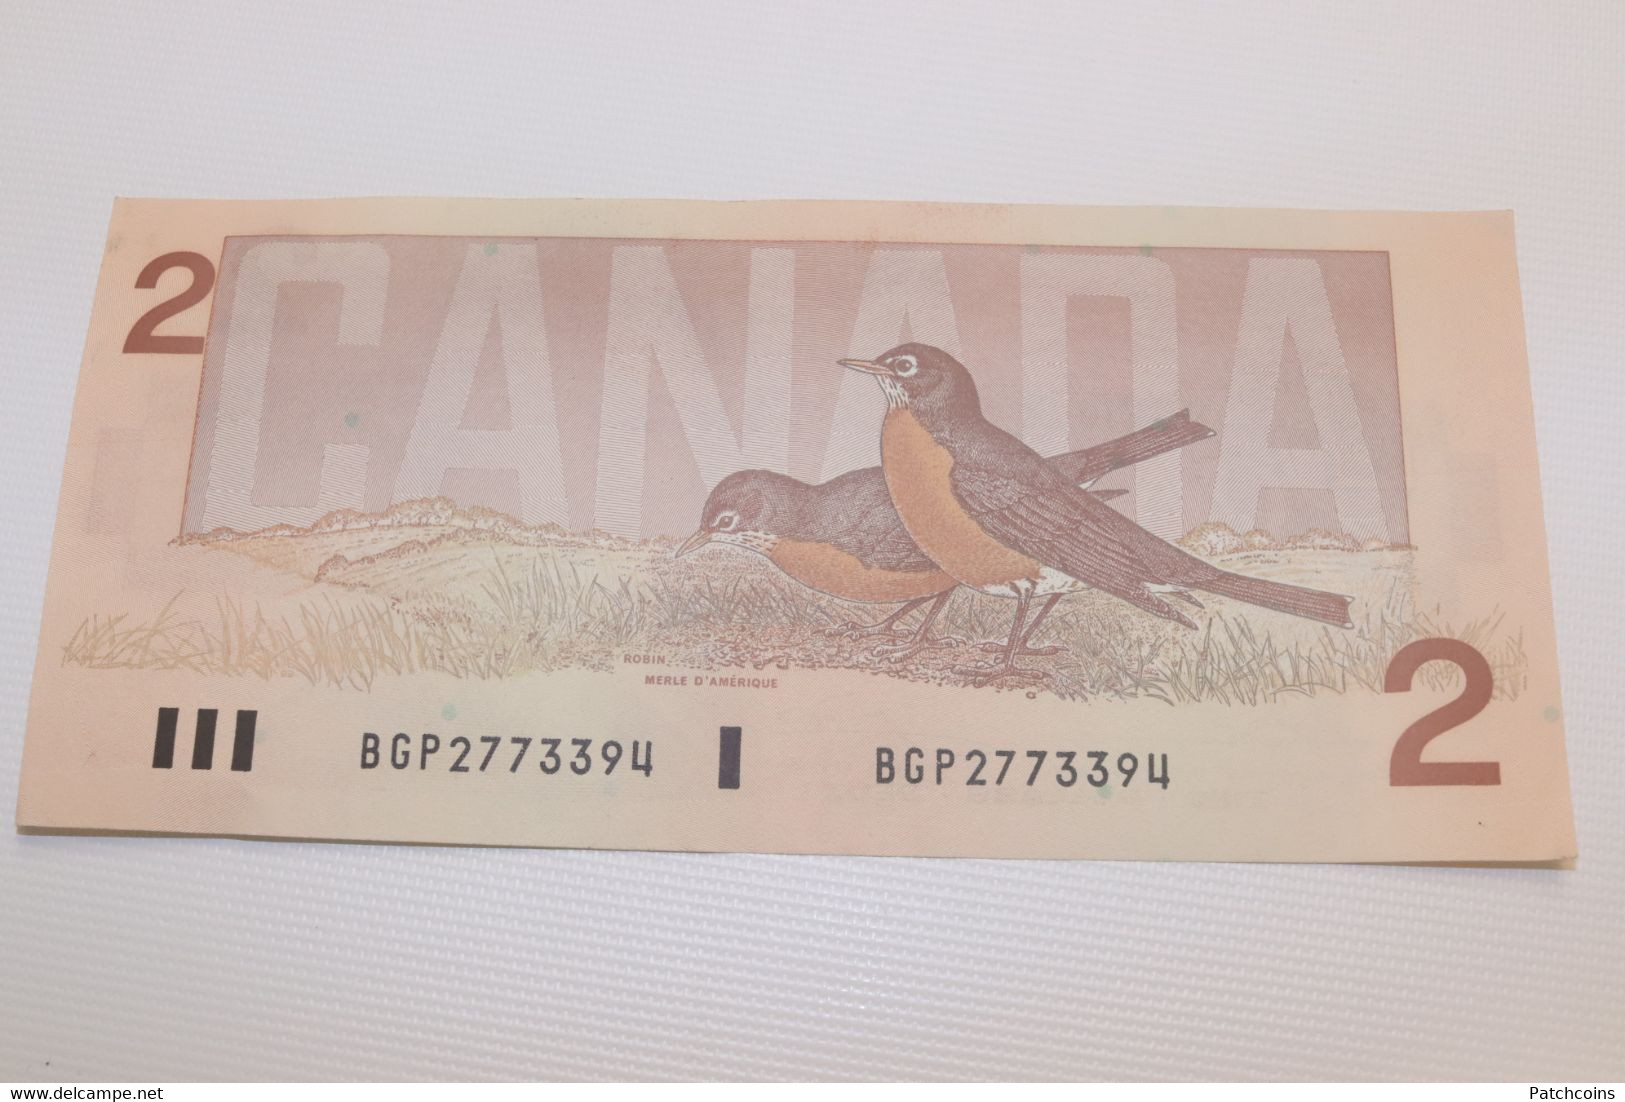 5 bills of 2 dollars 1986 canada